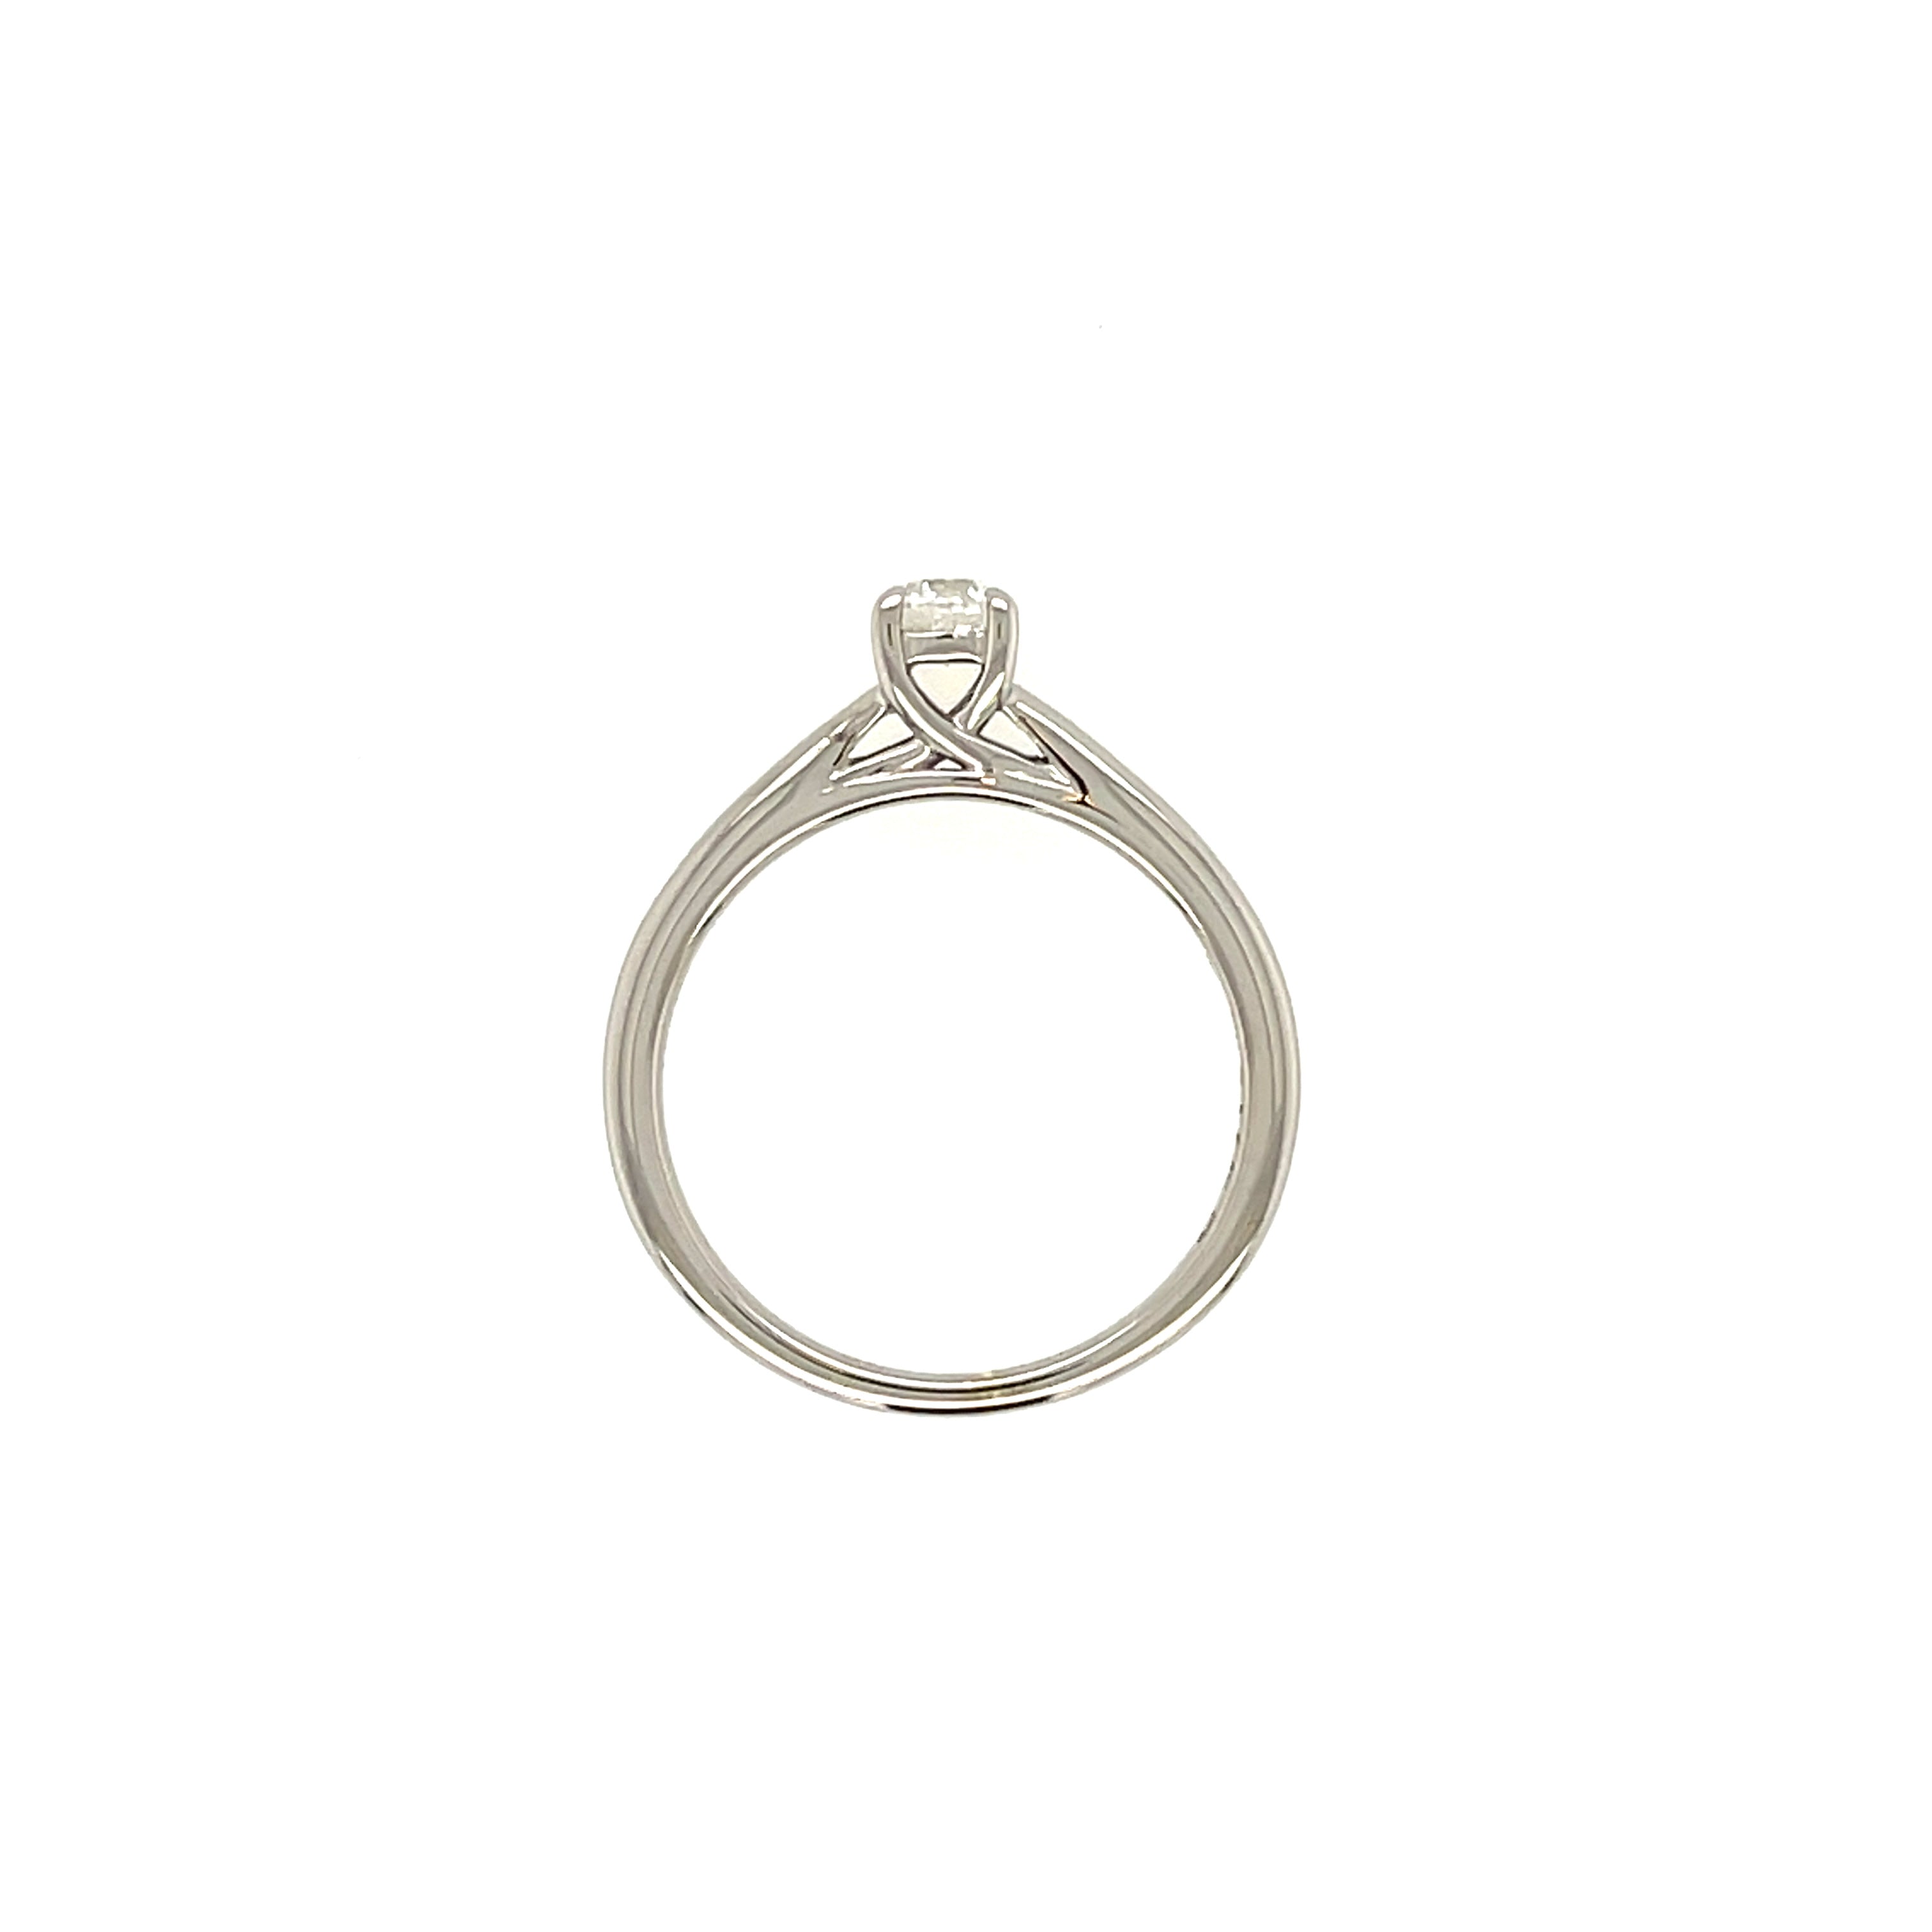 9ct White Gold 0.26ct Brilliant Cut Diamond Solitaire Engagement Ring